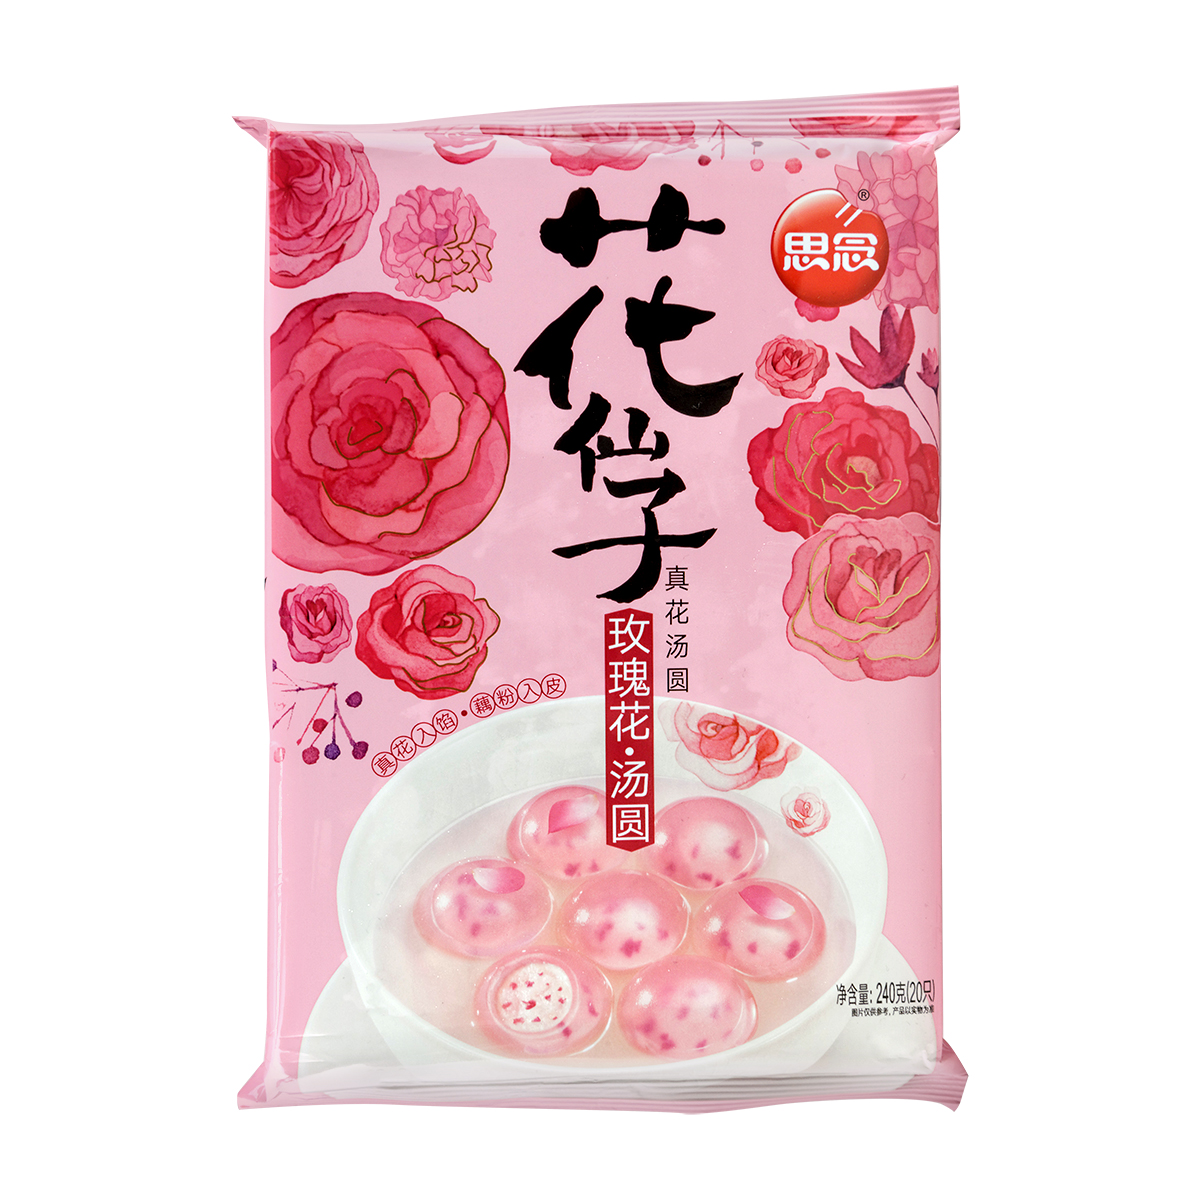 Exclusiv in magazine - Sweet dumplings Rose Flavour SYNEAR 240g, asianfood.ro